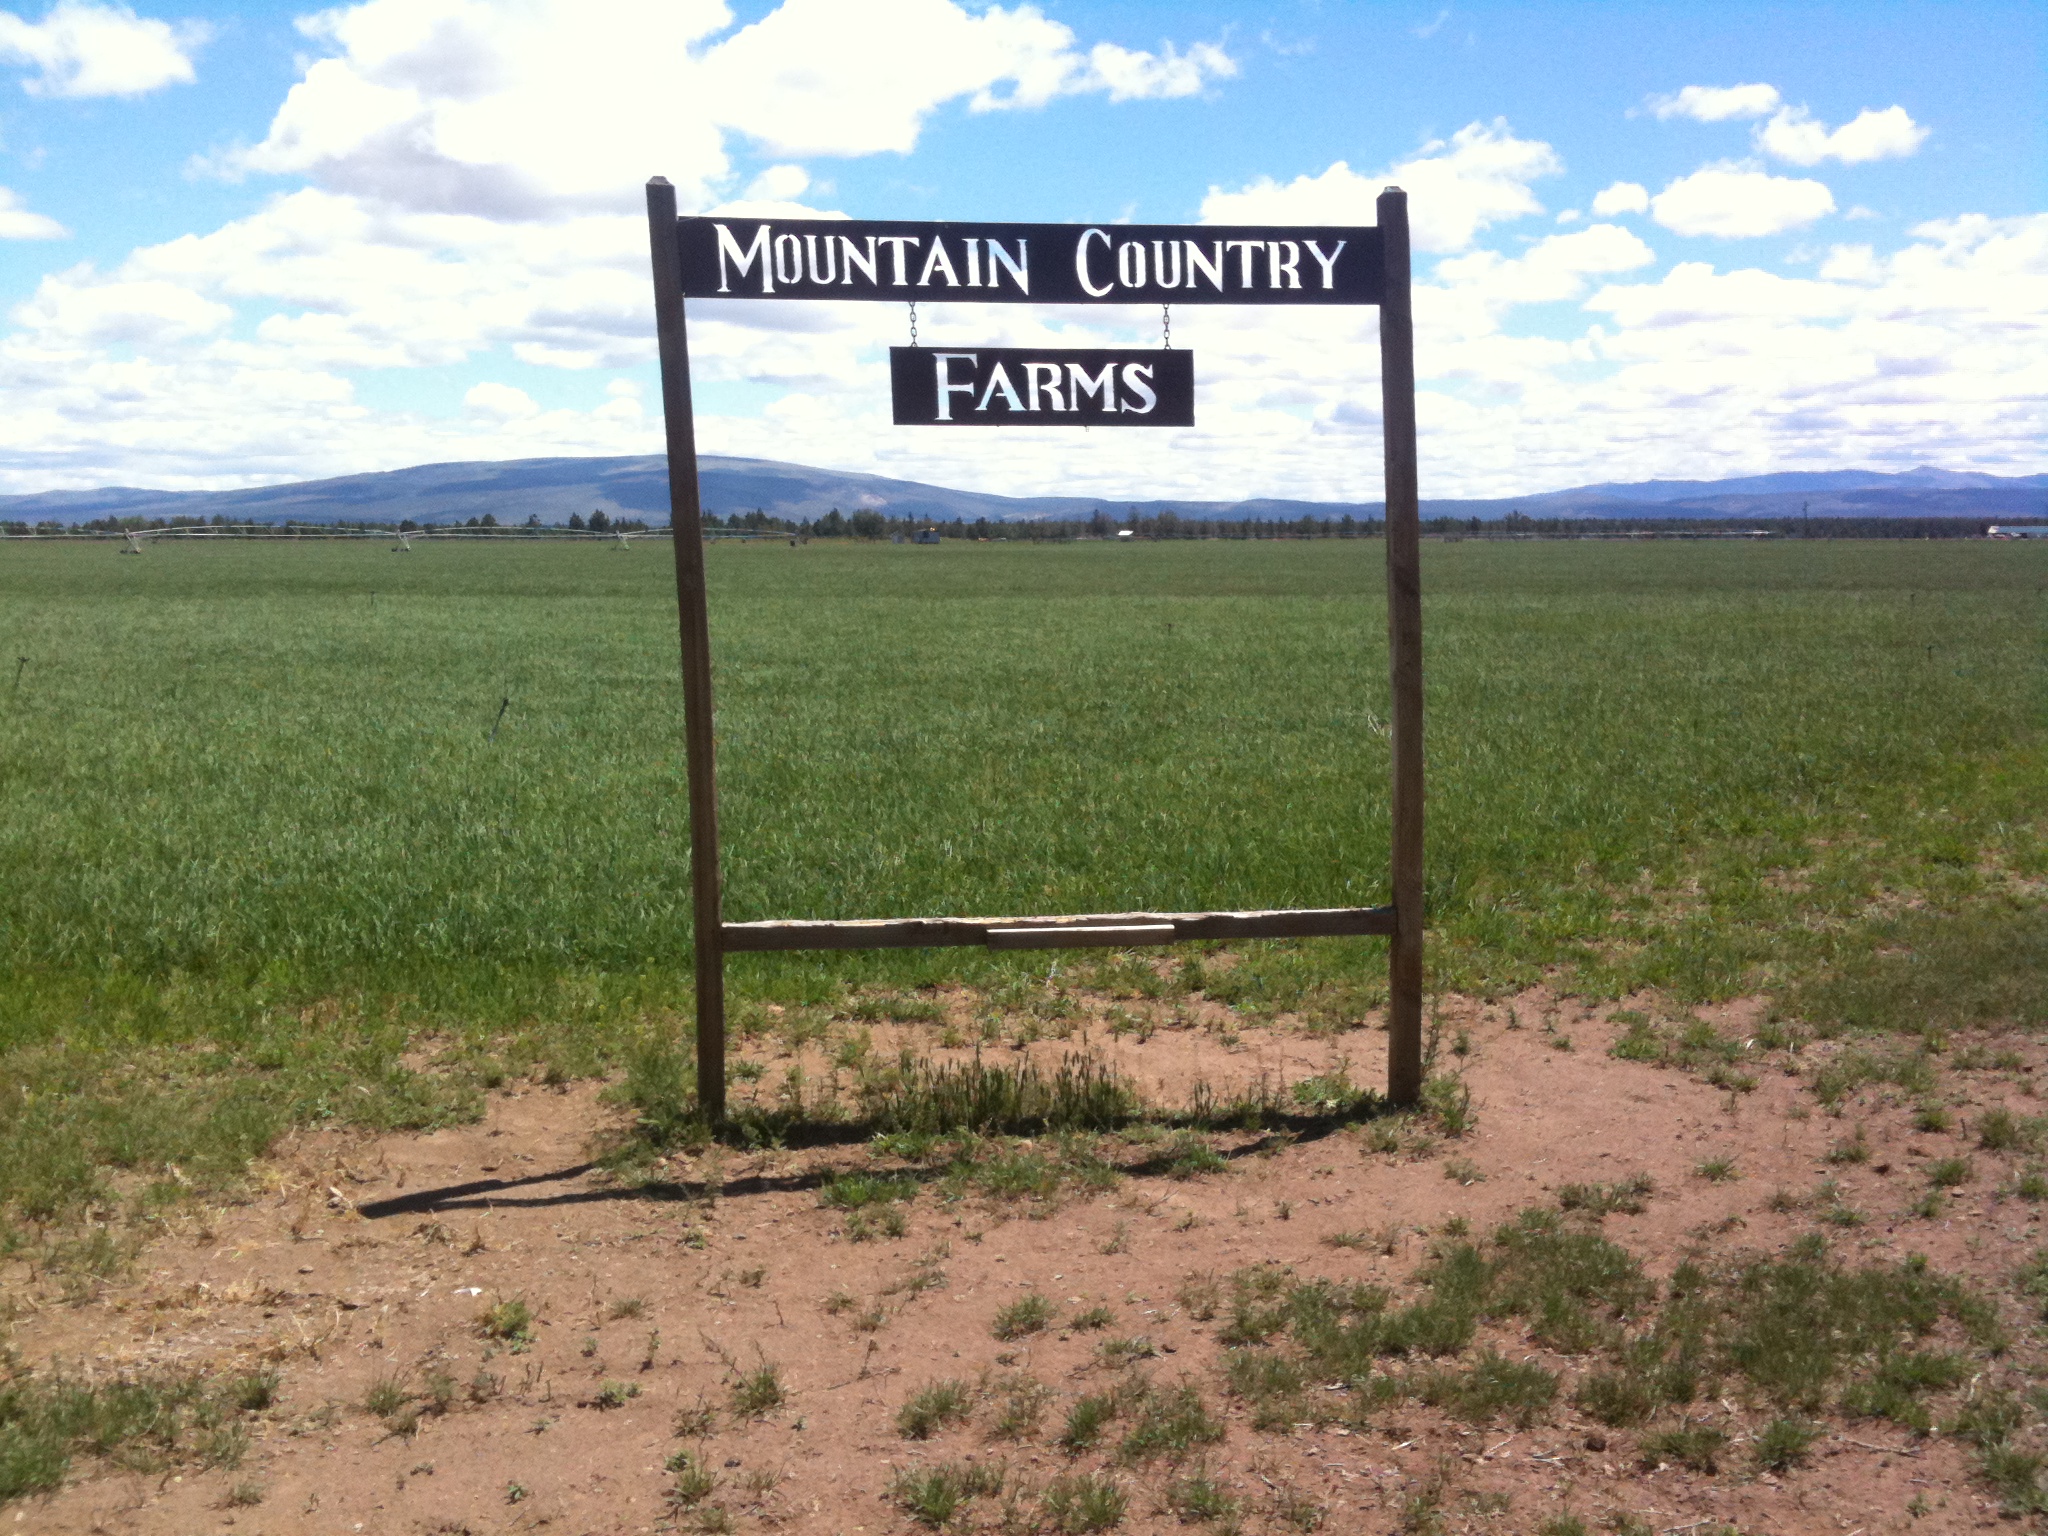 Mountain Country Farms.